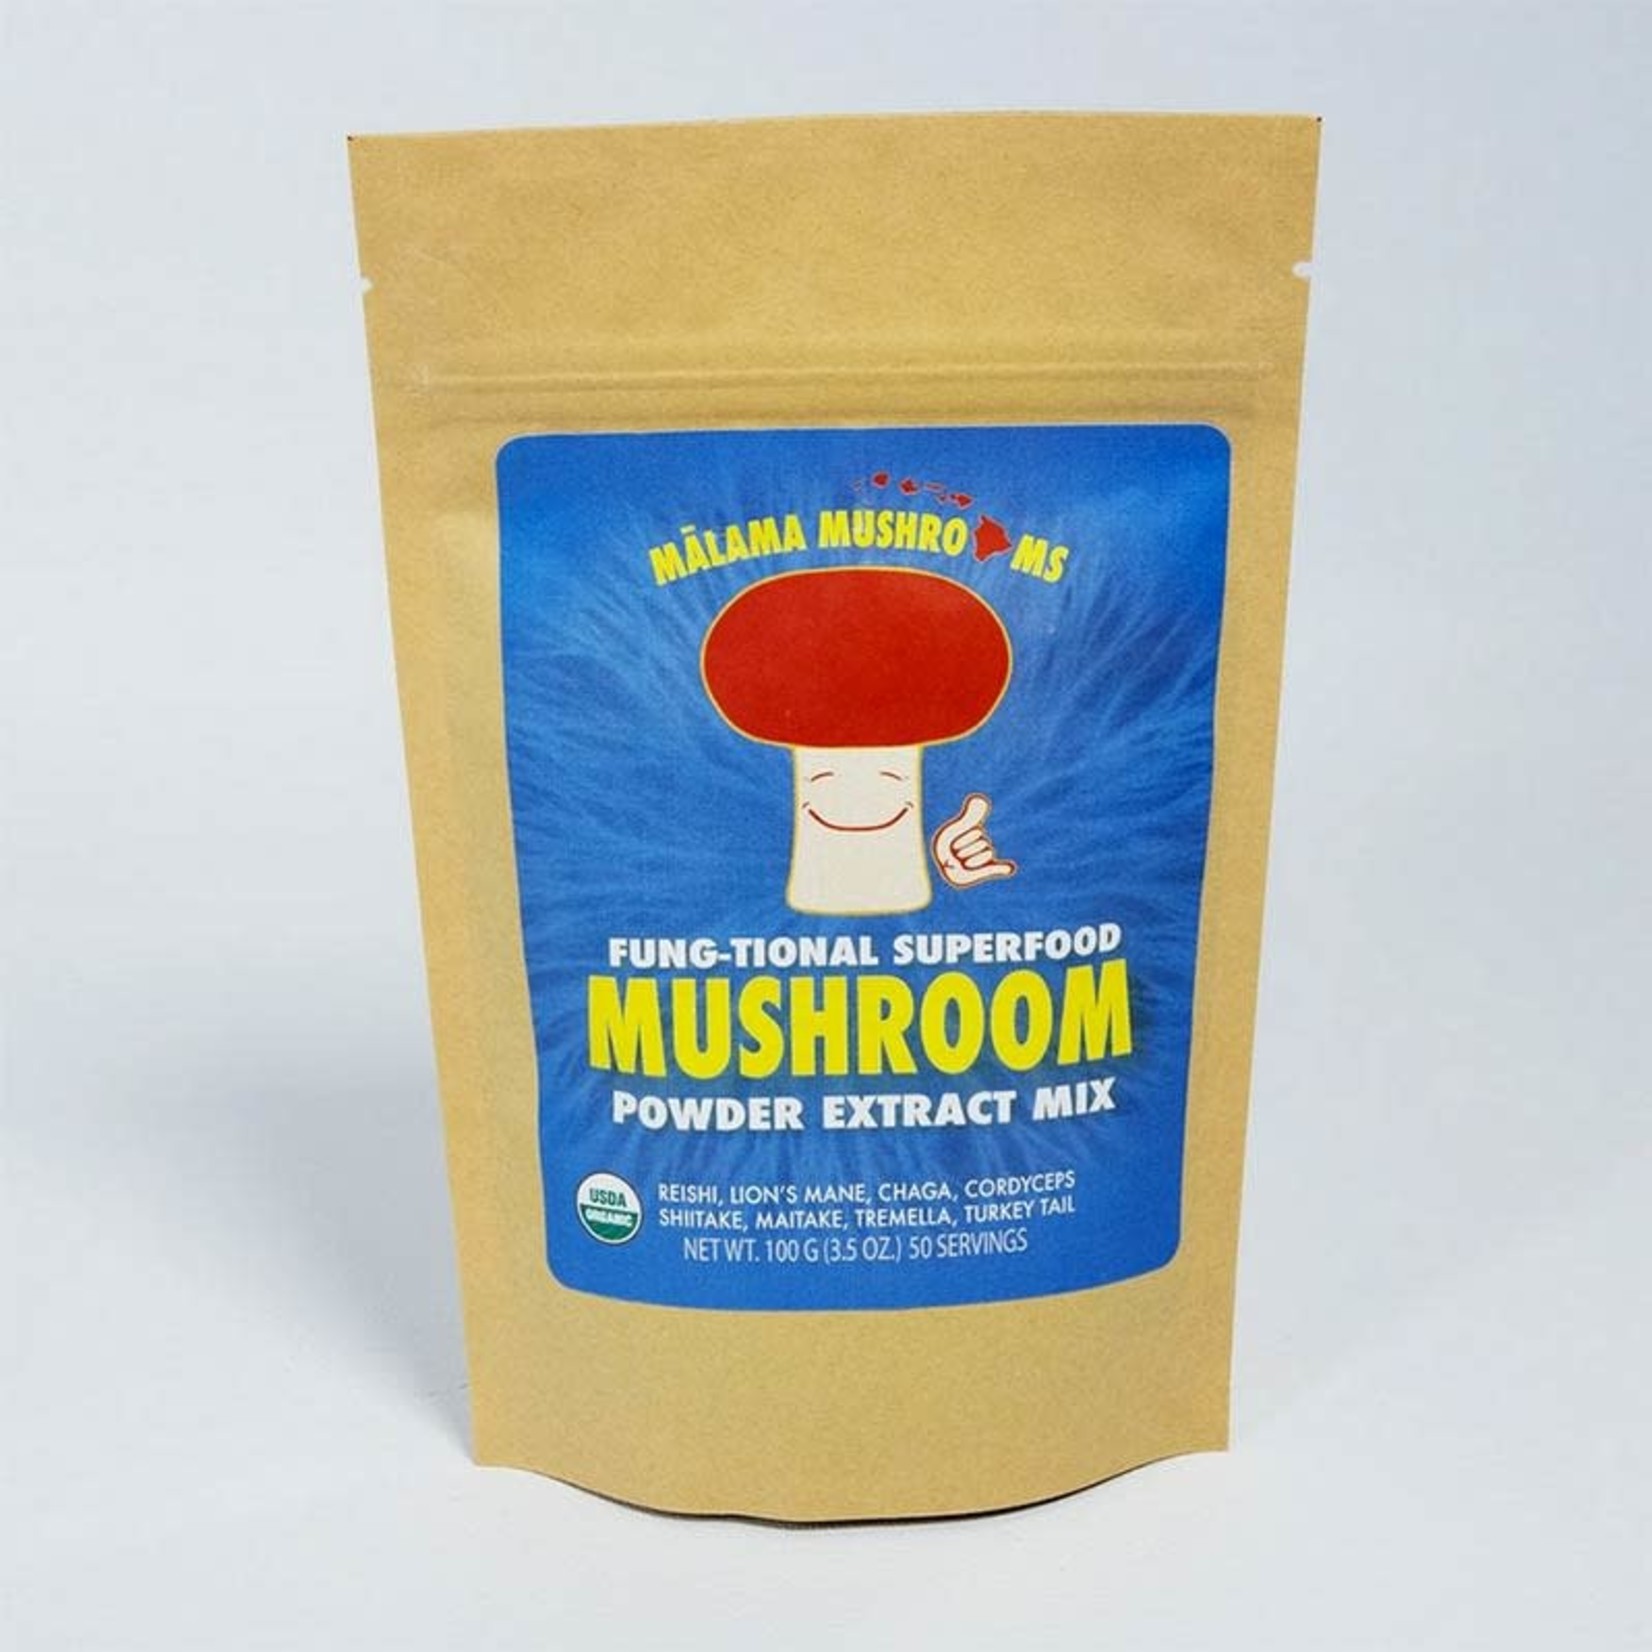 Malama Mushrooms Fung-tional Superfood 8 Mushroom Powder 3.5 oz by Malama Mushrooms